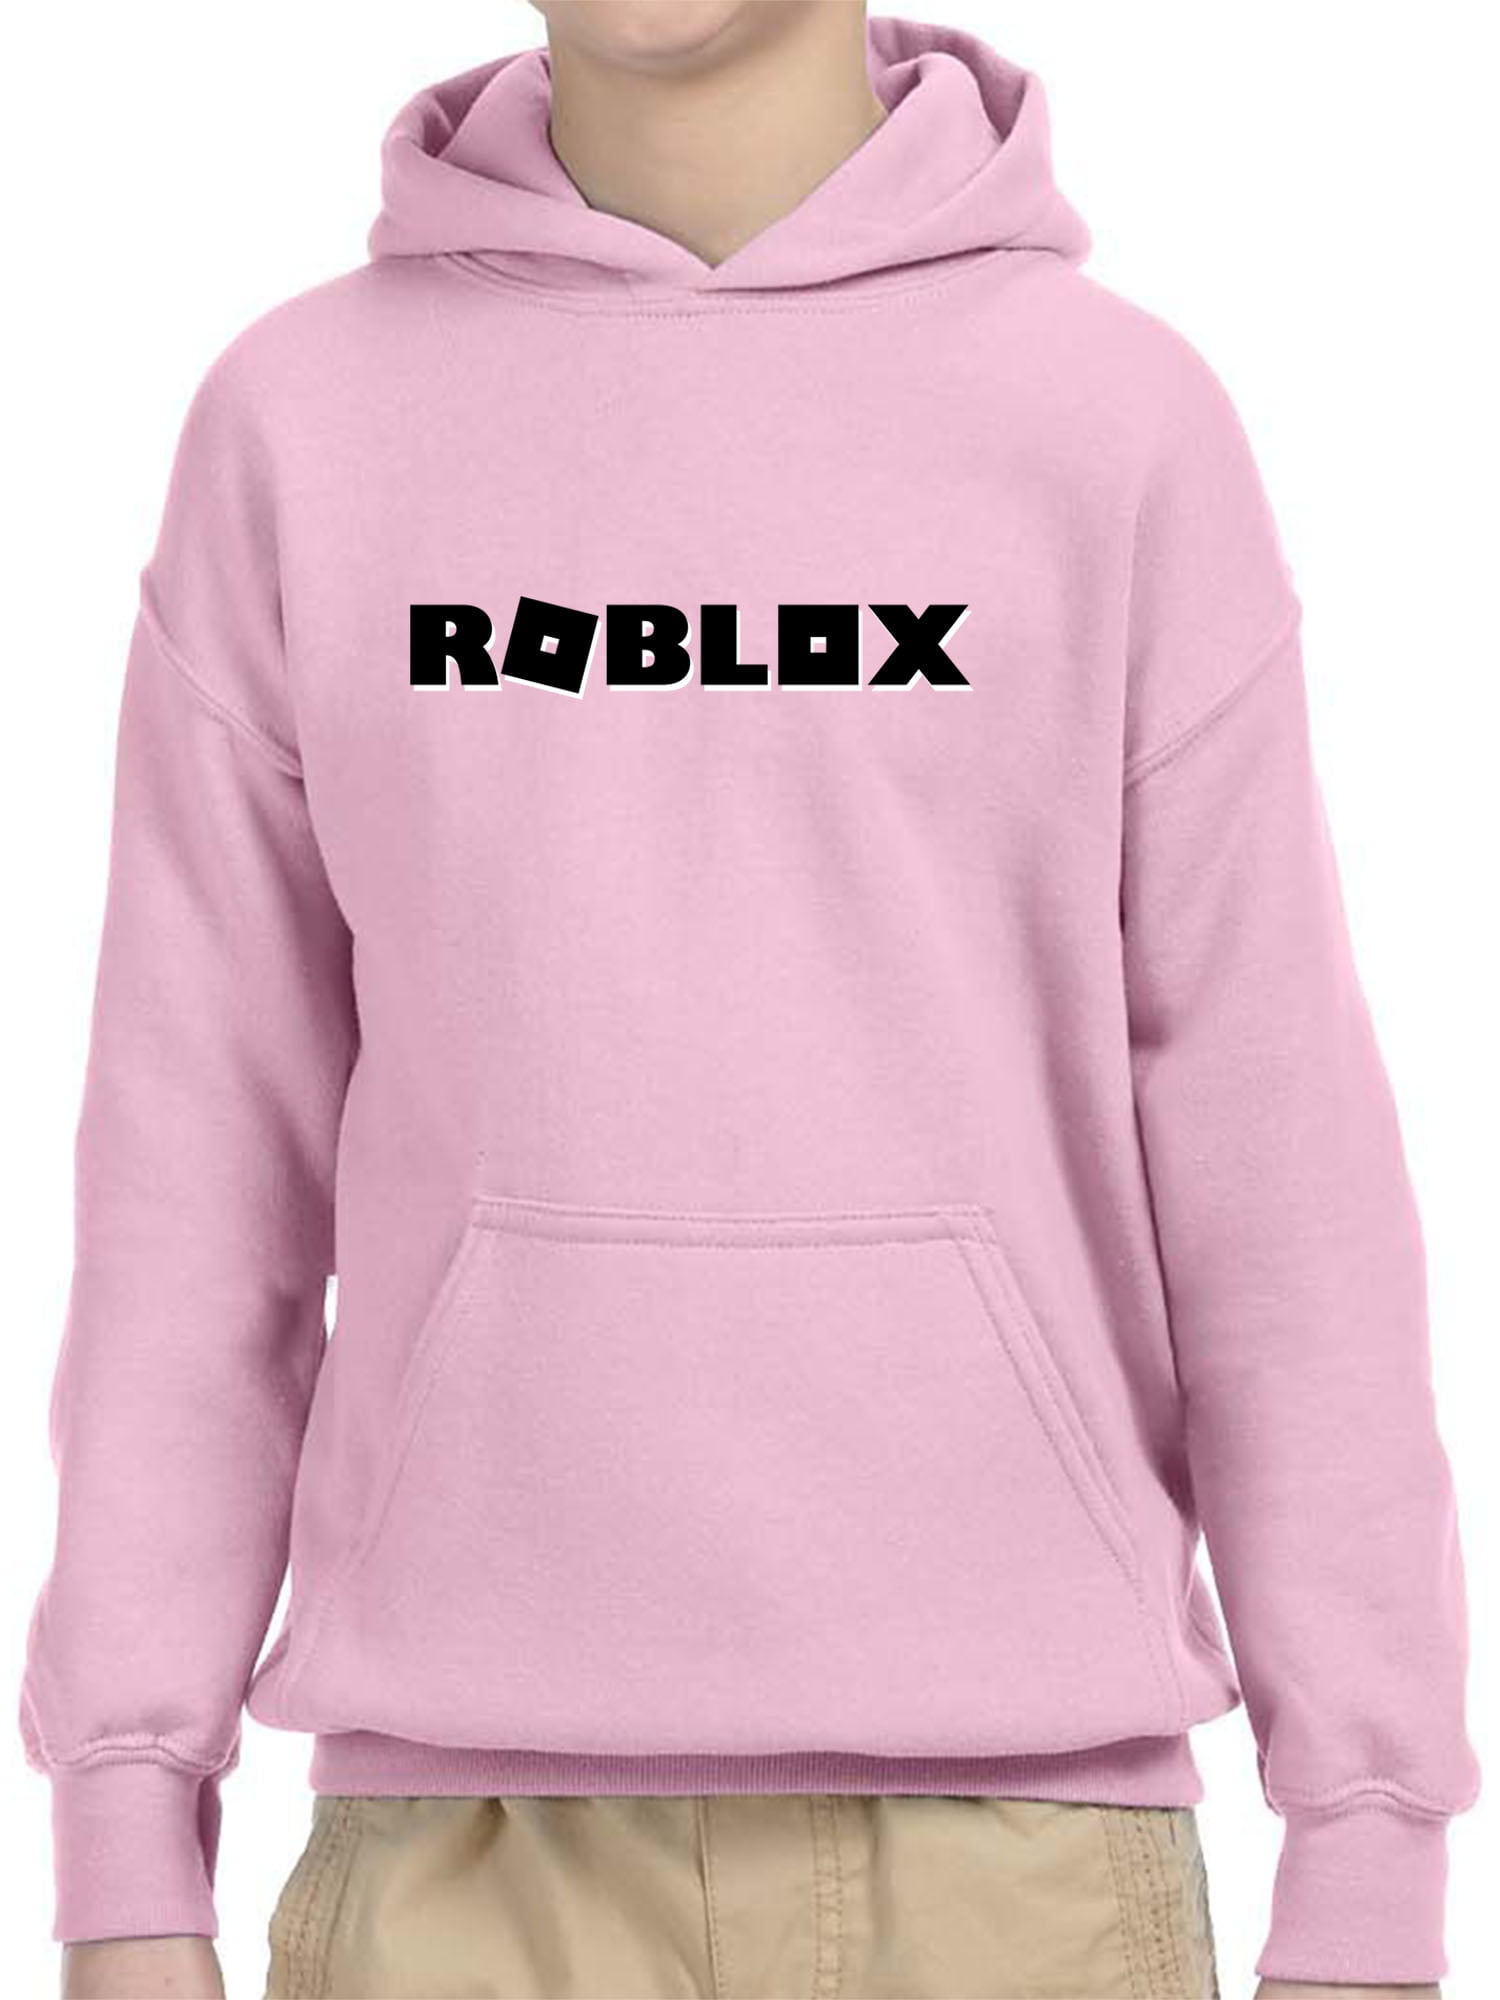 New Way New Way 1168 Youth Hoodie Roblox Block Logo Game Accent Unisex Pullover Sweatshirt Medium Light Pink Walmart Com Walmart Com - hoodie roblox pink shirt